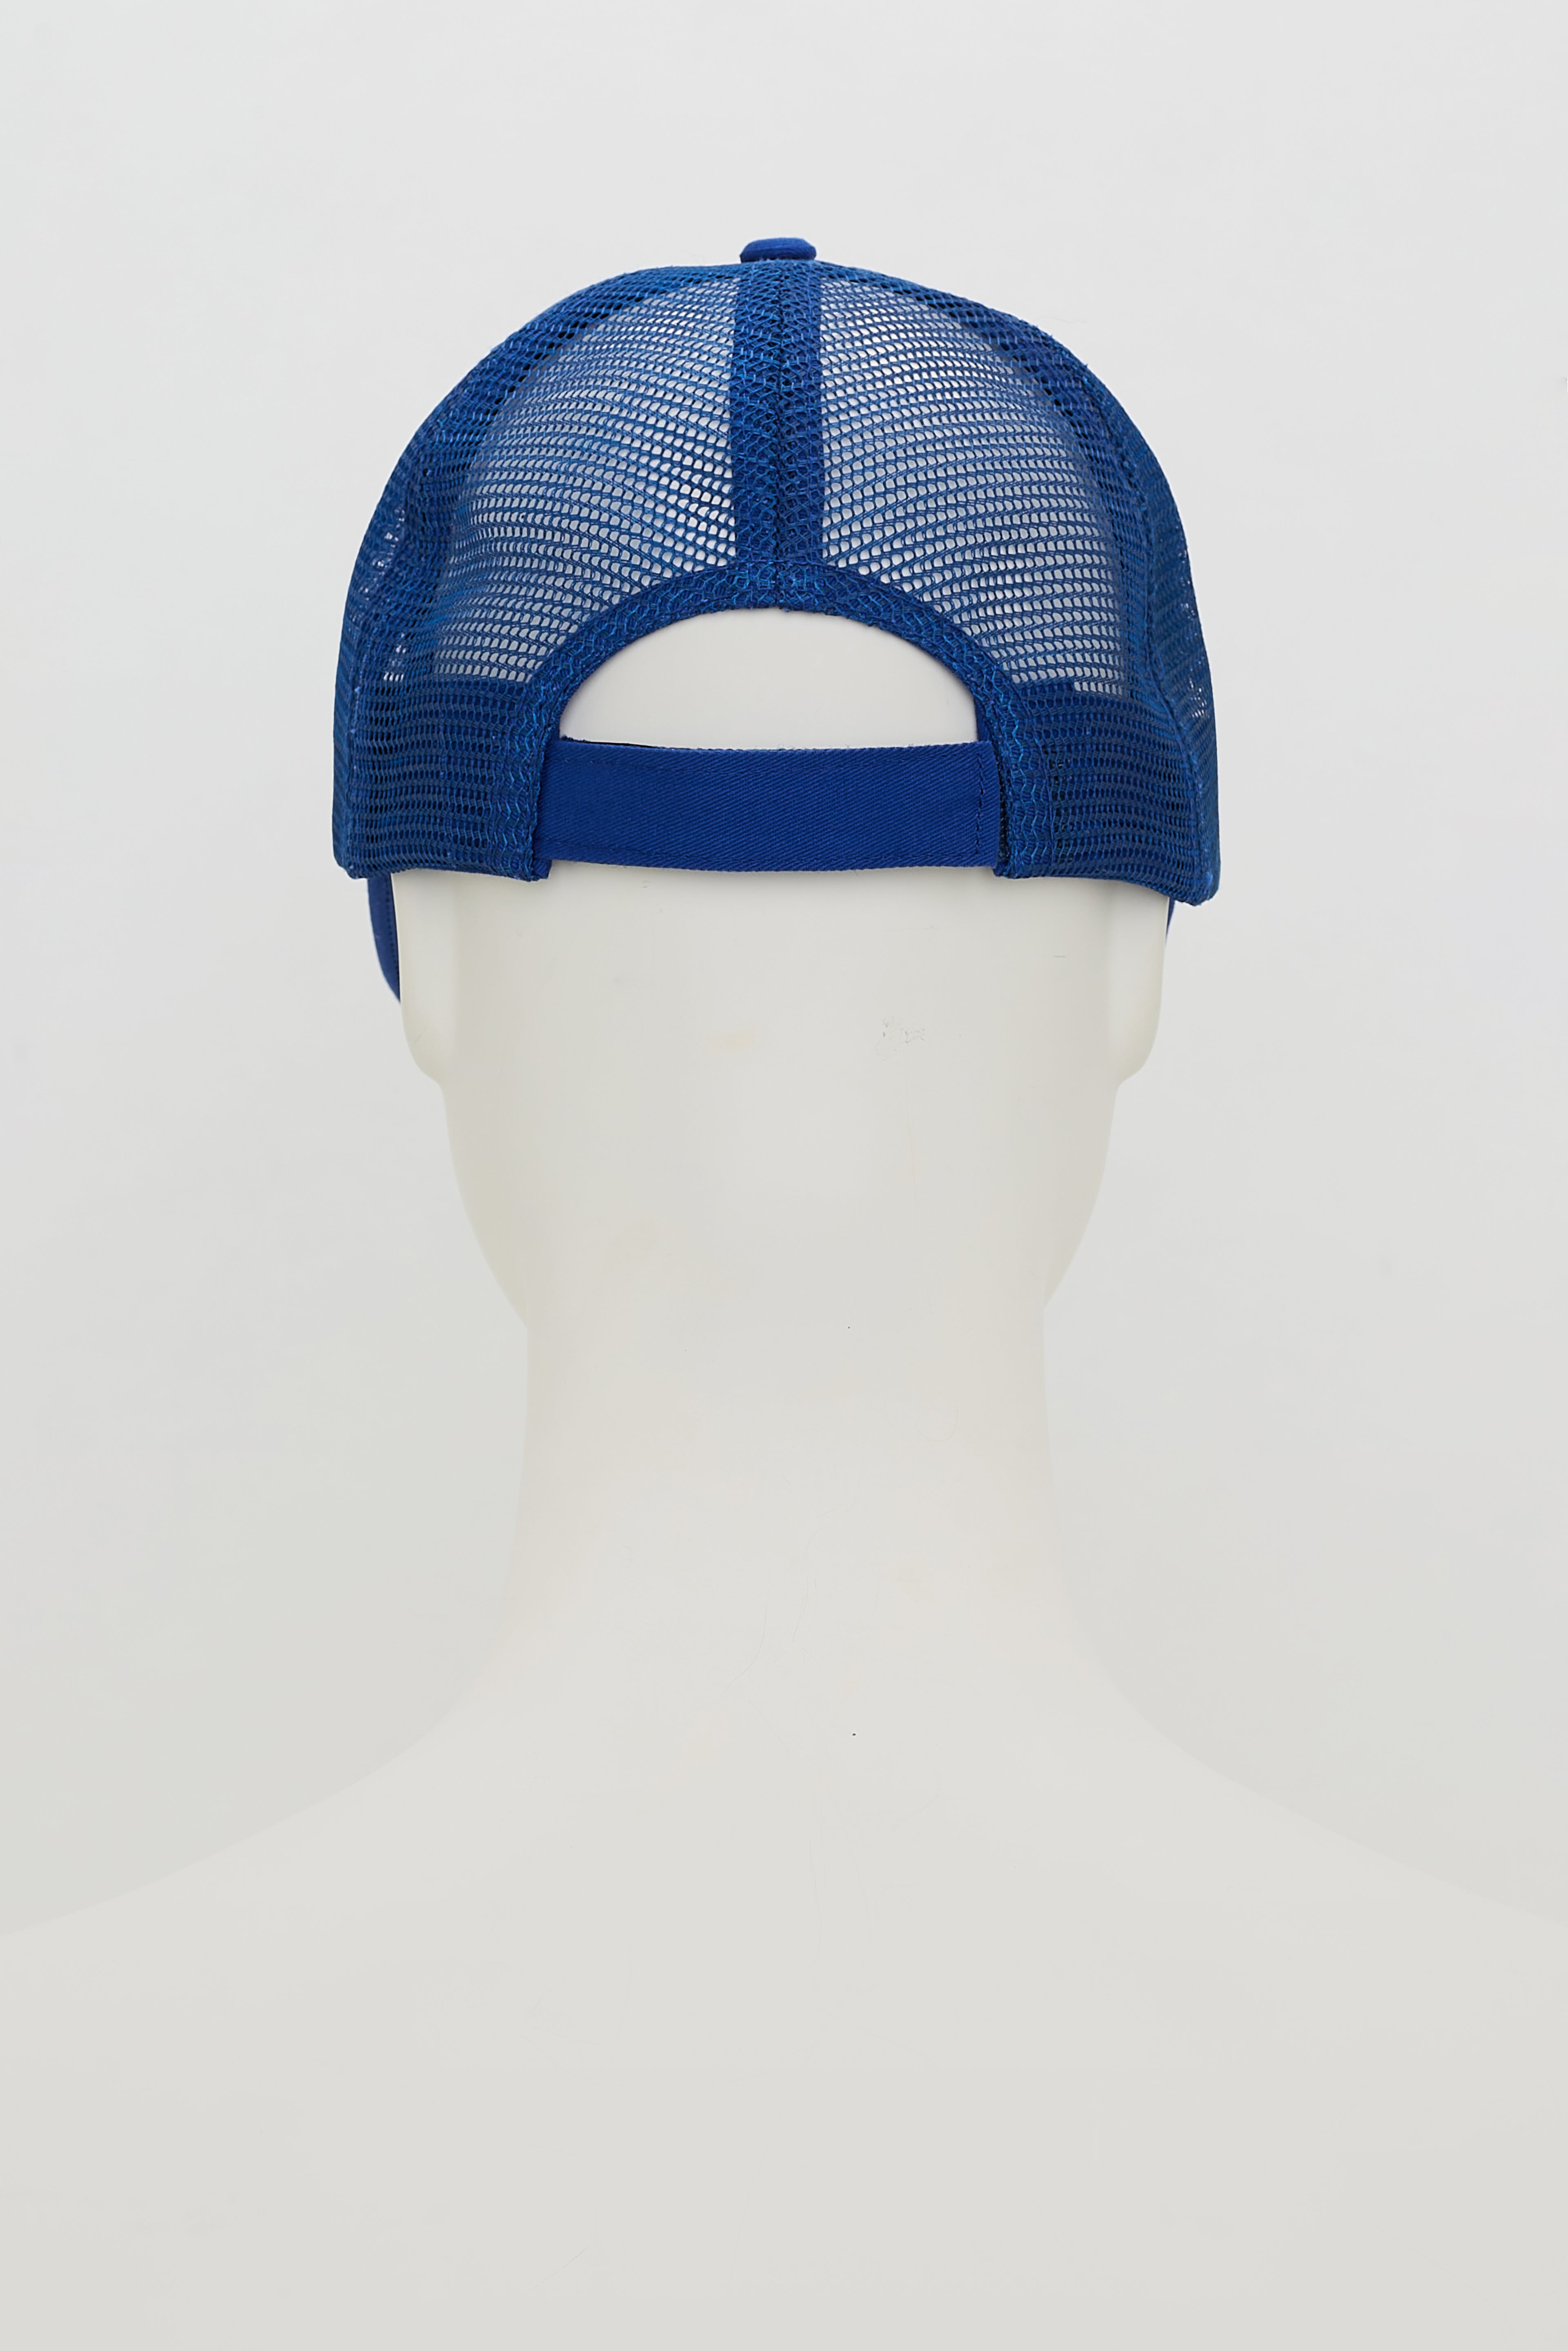 Dorothee-Schumacher-OUTLET-SALE-CHIYC-baseball-cap-Accessoires-OS-royal-blue-3.jpg